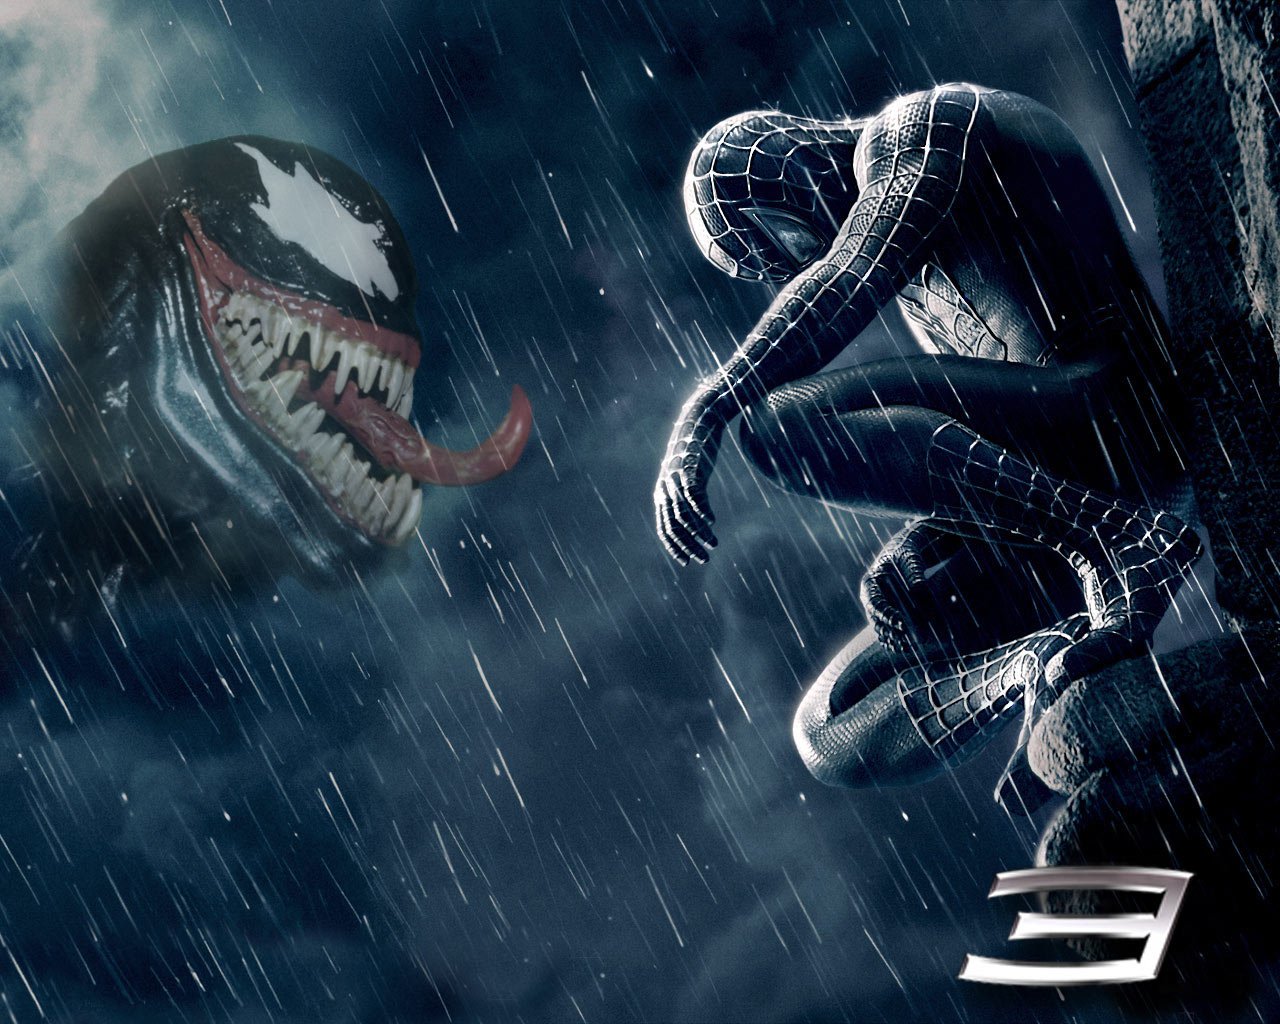 49+] Venom Spiderman 3 Wallpaper - WallpaperSafari